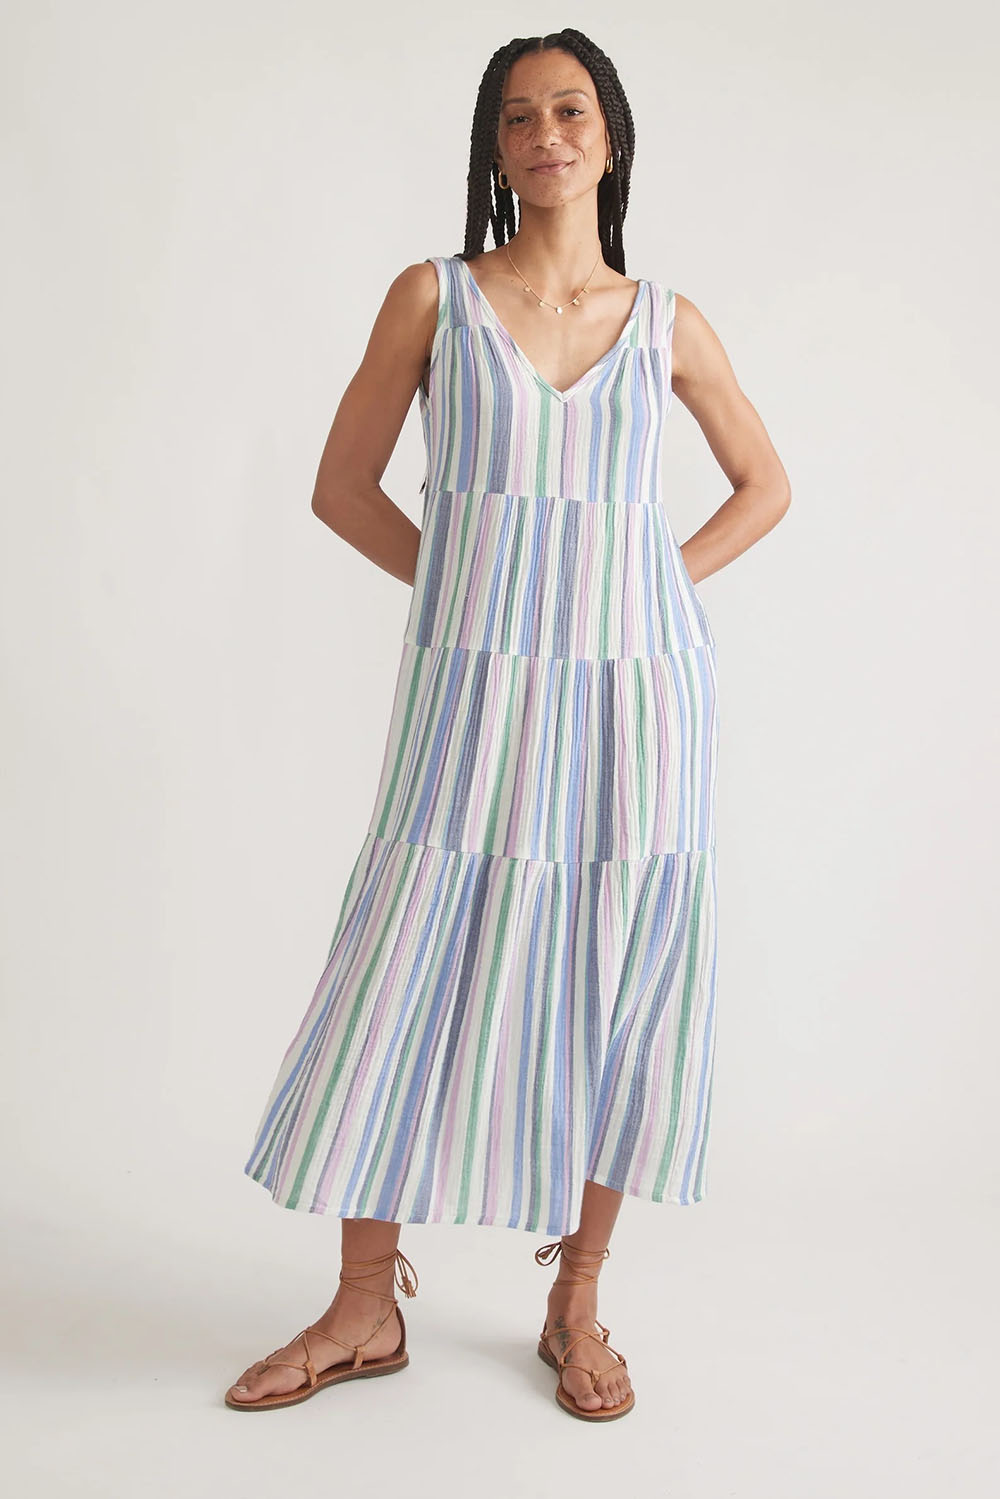 Marine Layer - Corinne Maxi Dress - Multi Cool Stripe - Front